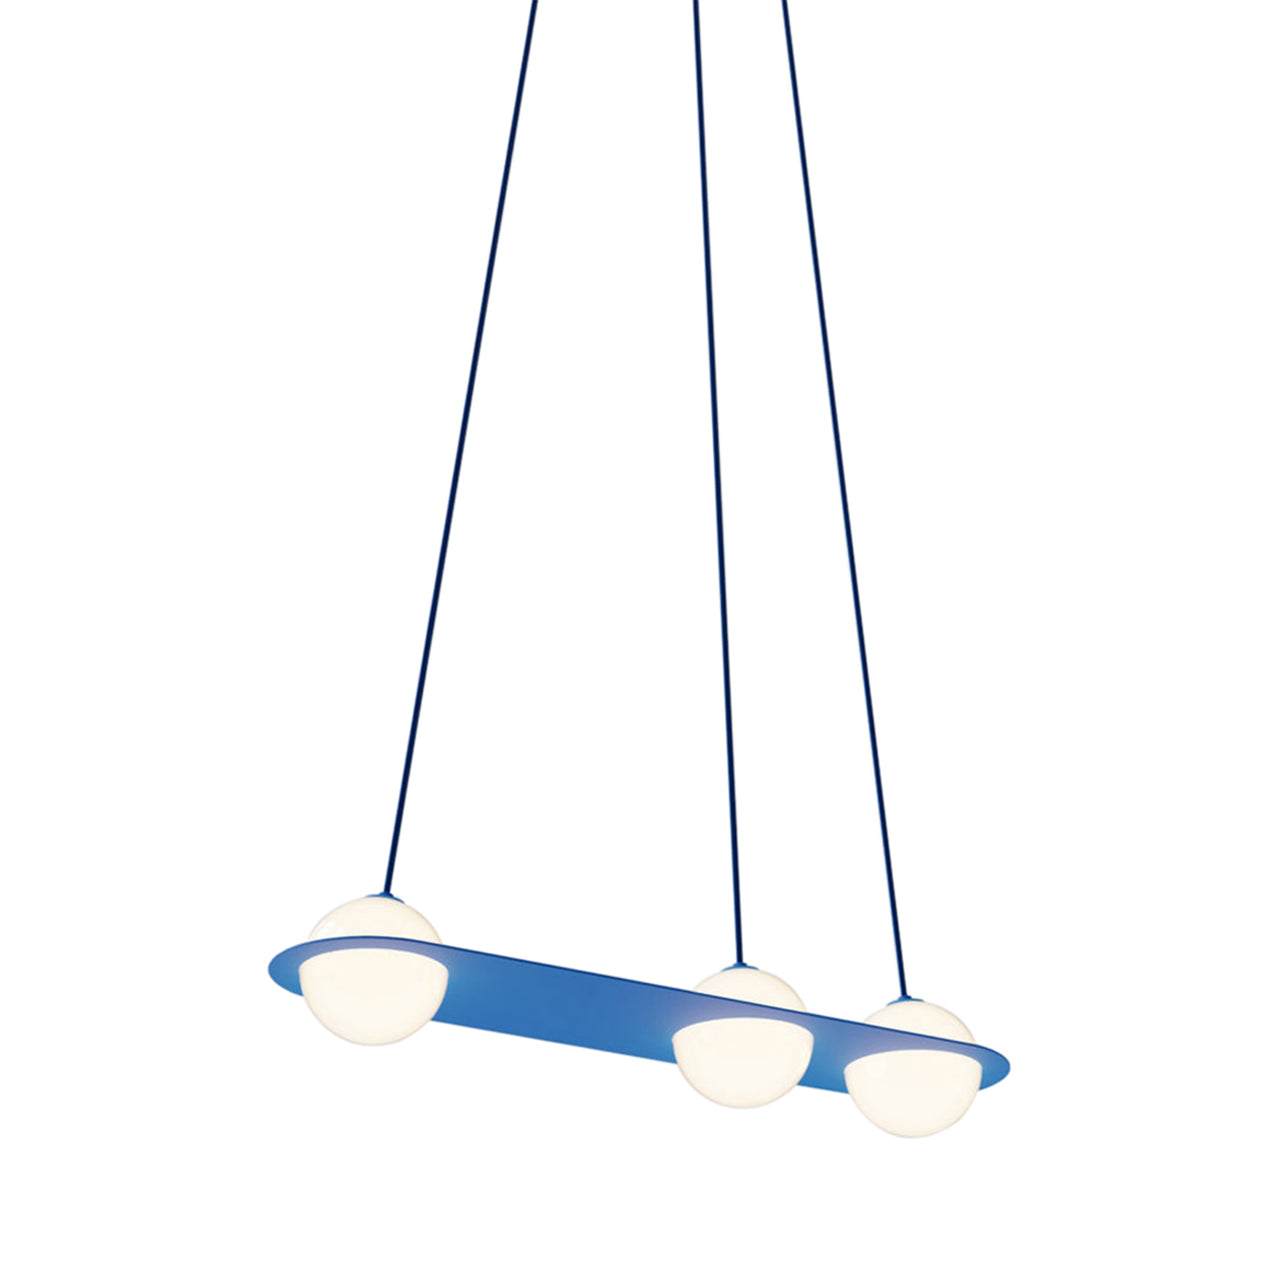 Laurent 07 Suspension Lamp: Blue + Blue + Angled Wires